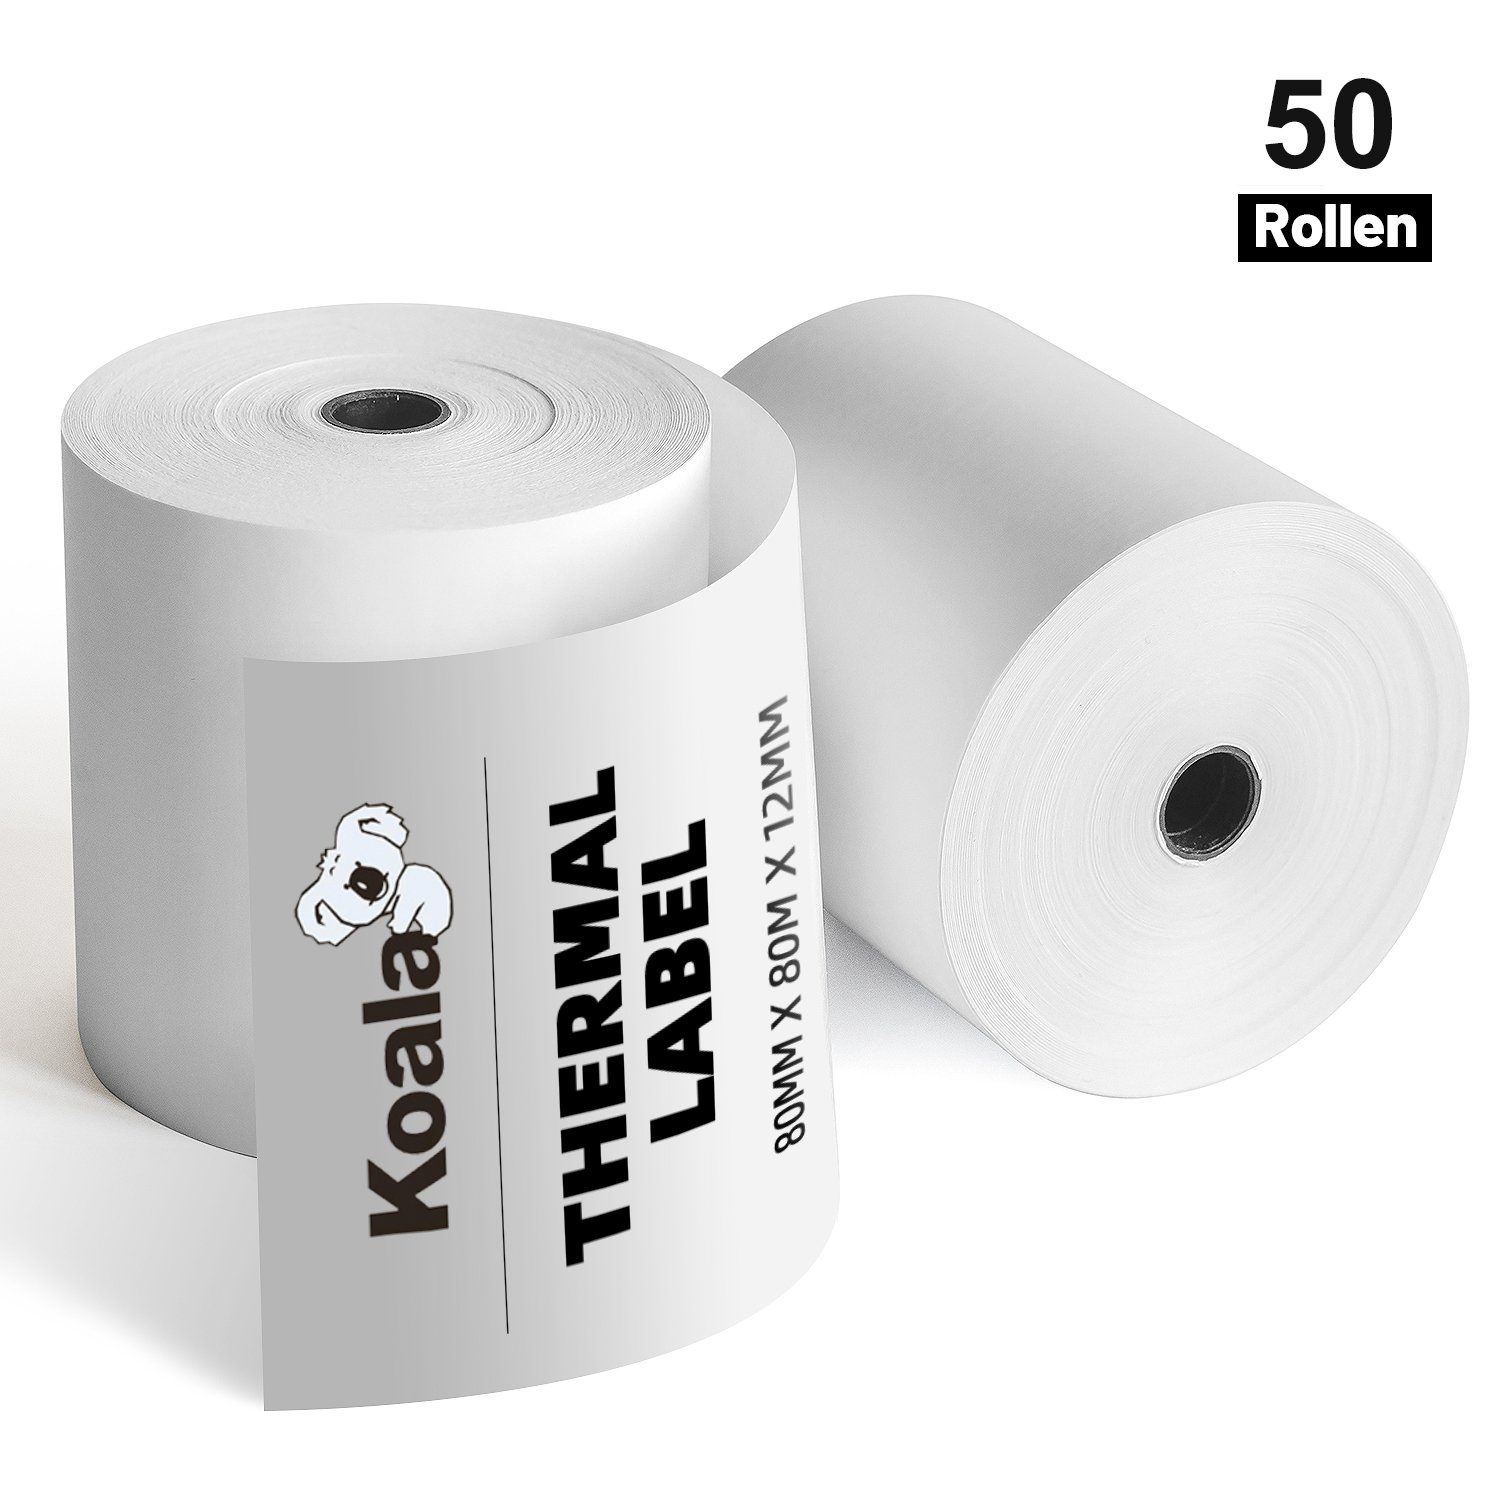 für Koala 80x Thermopapier Rollen Kassen, 50 Etikettenpapier Bonrolle mm 80 Drucker